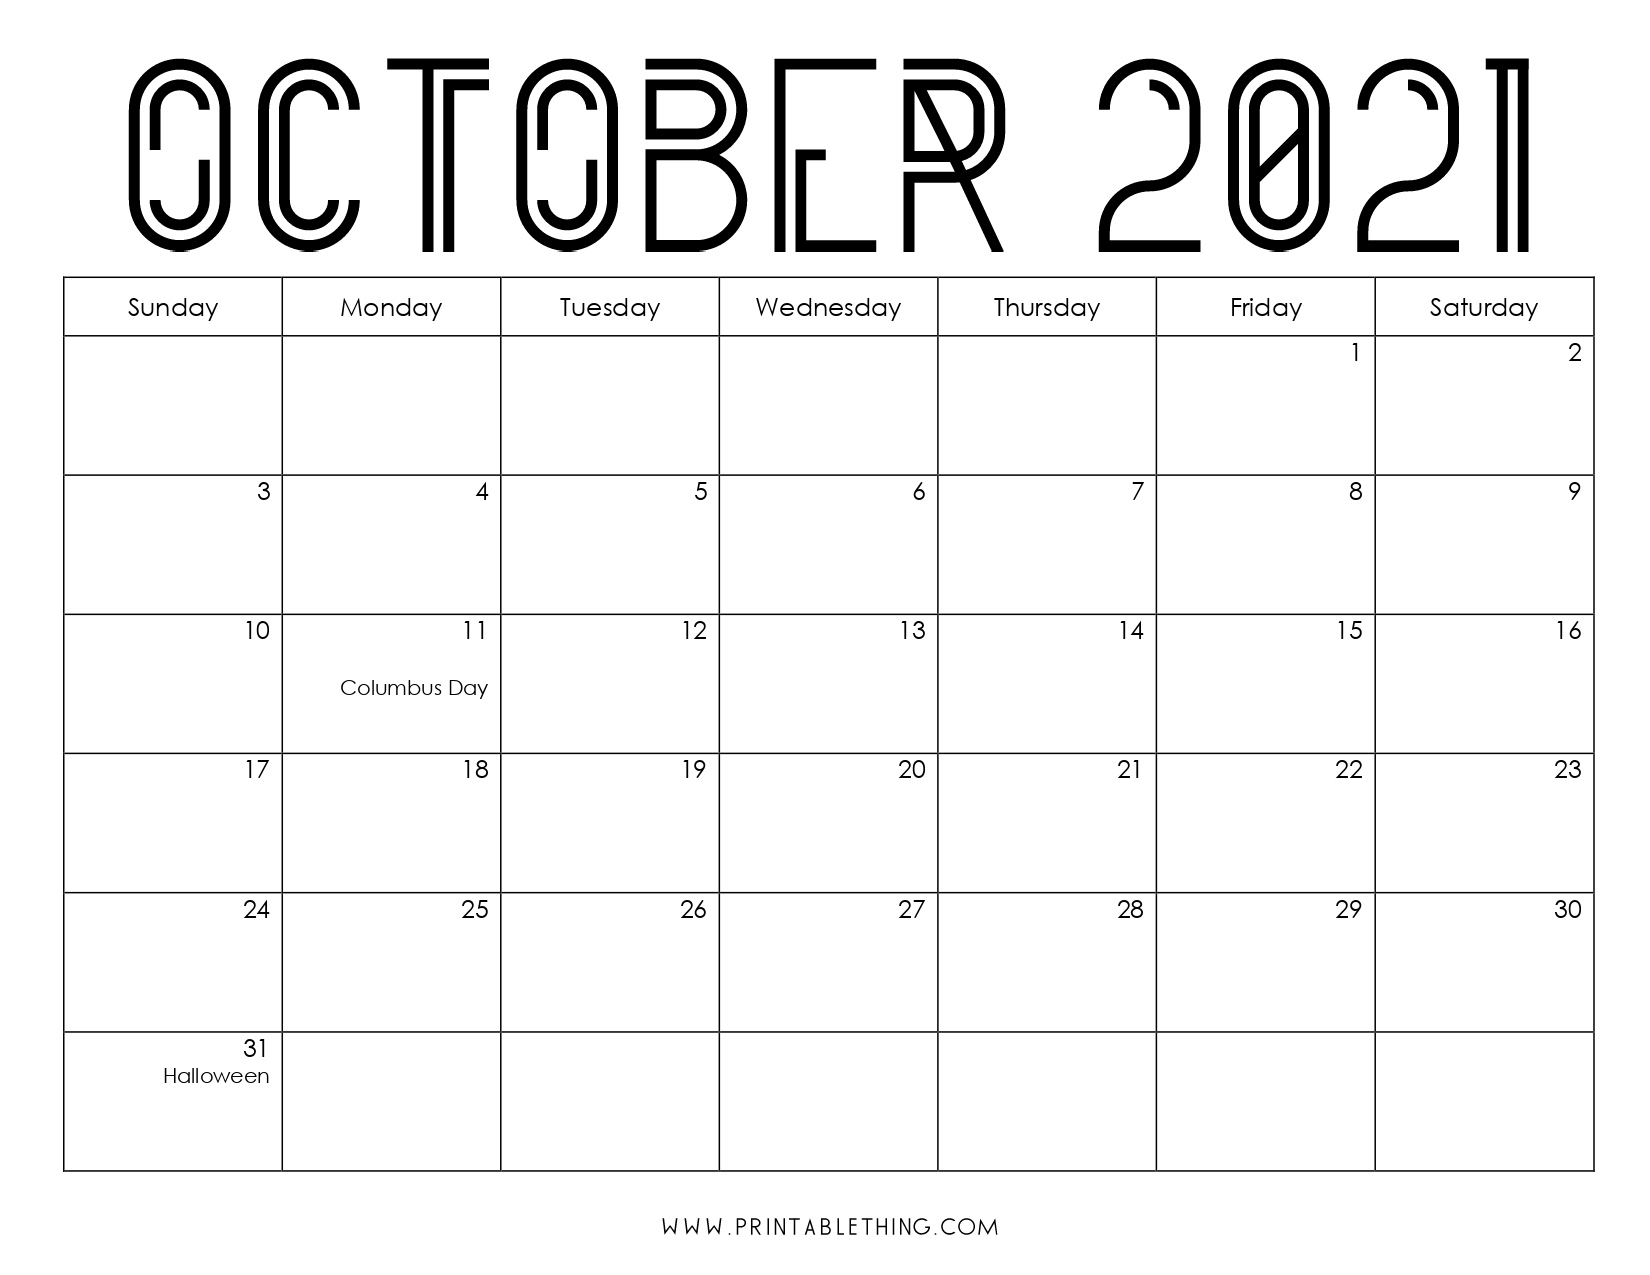 October 2021 Calendar Pdf, October 2021 Calendar Image Free Print A Calendar October 2021